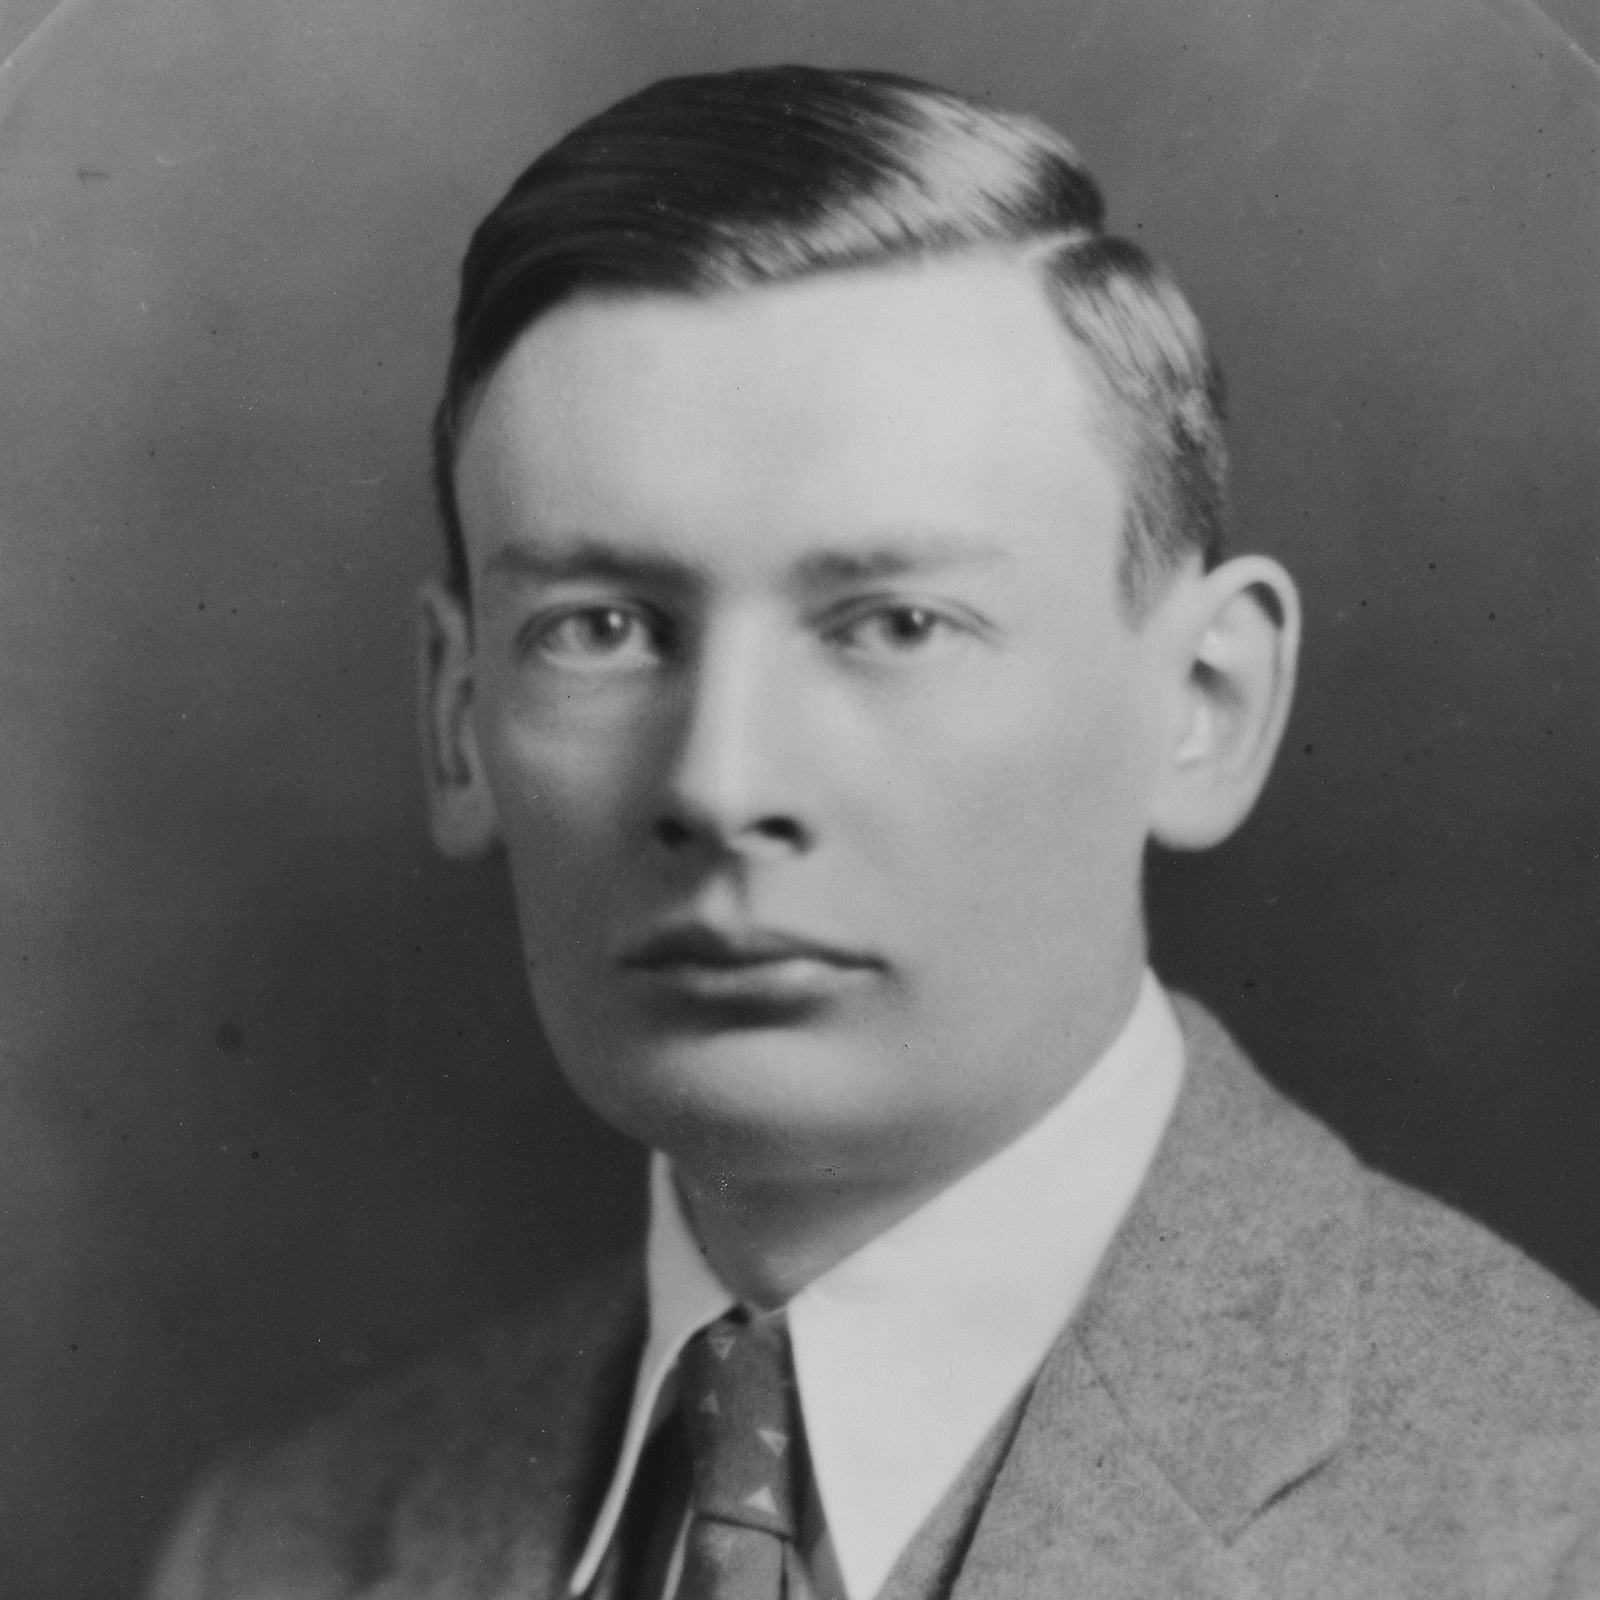 Frederick Norton, NACA's first technical employee